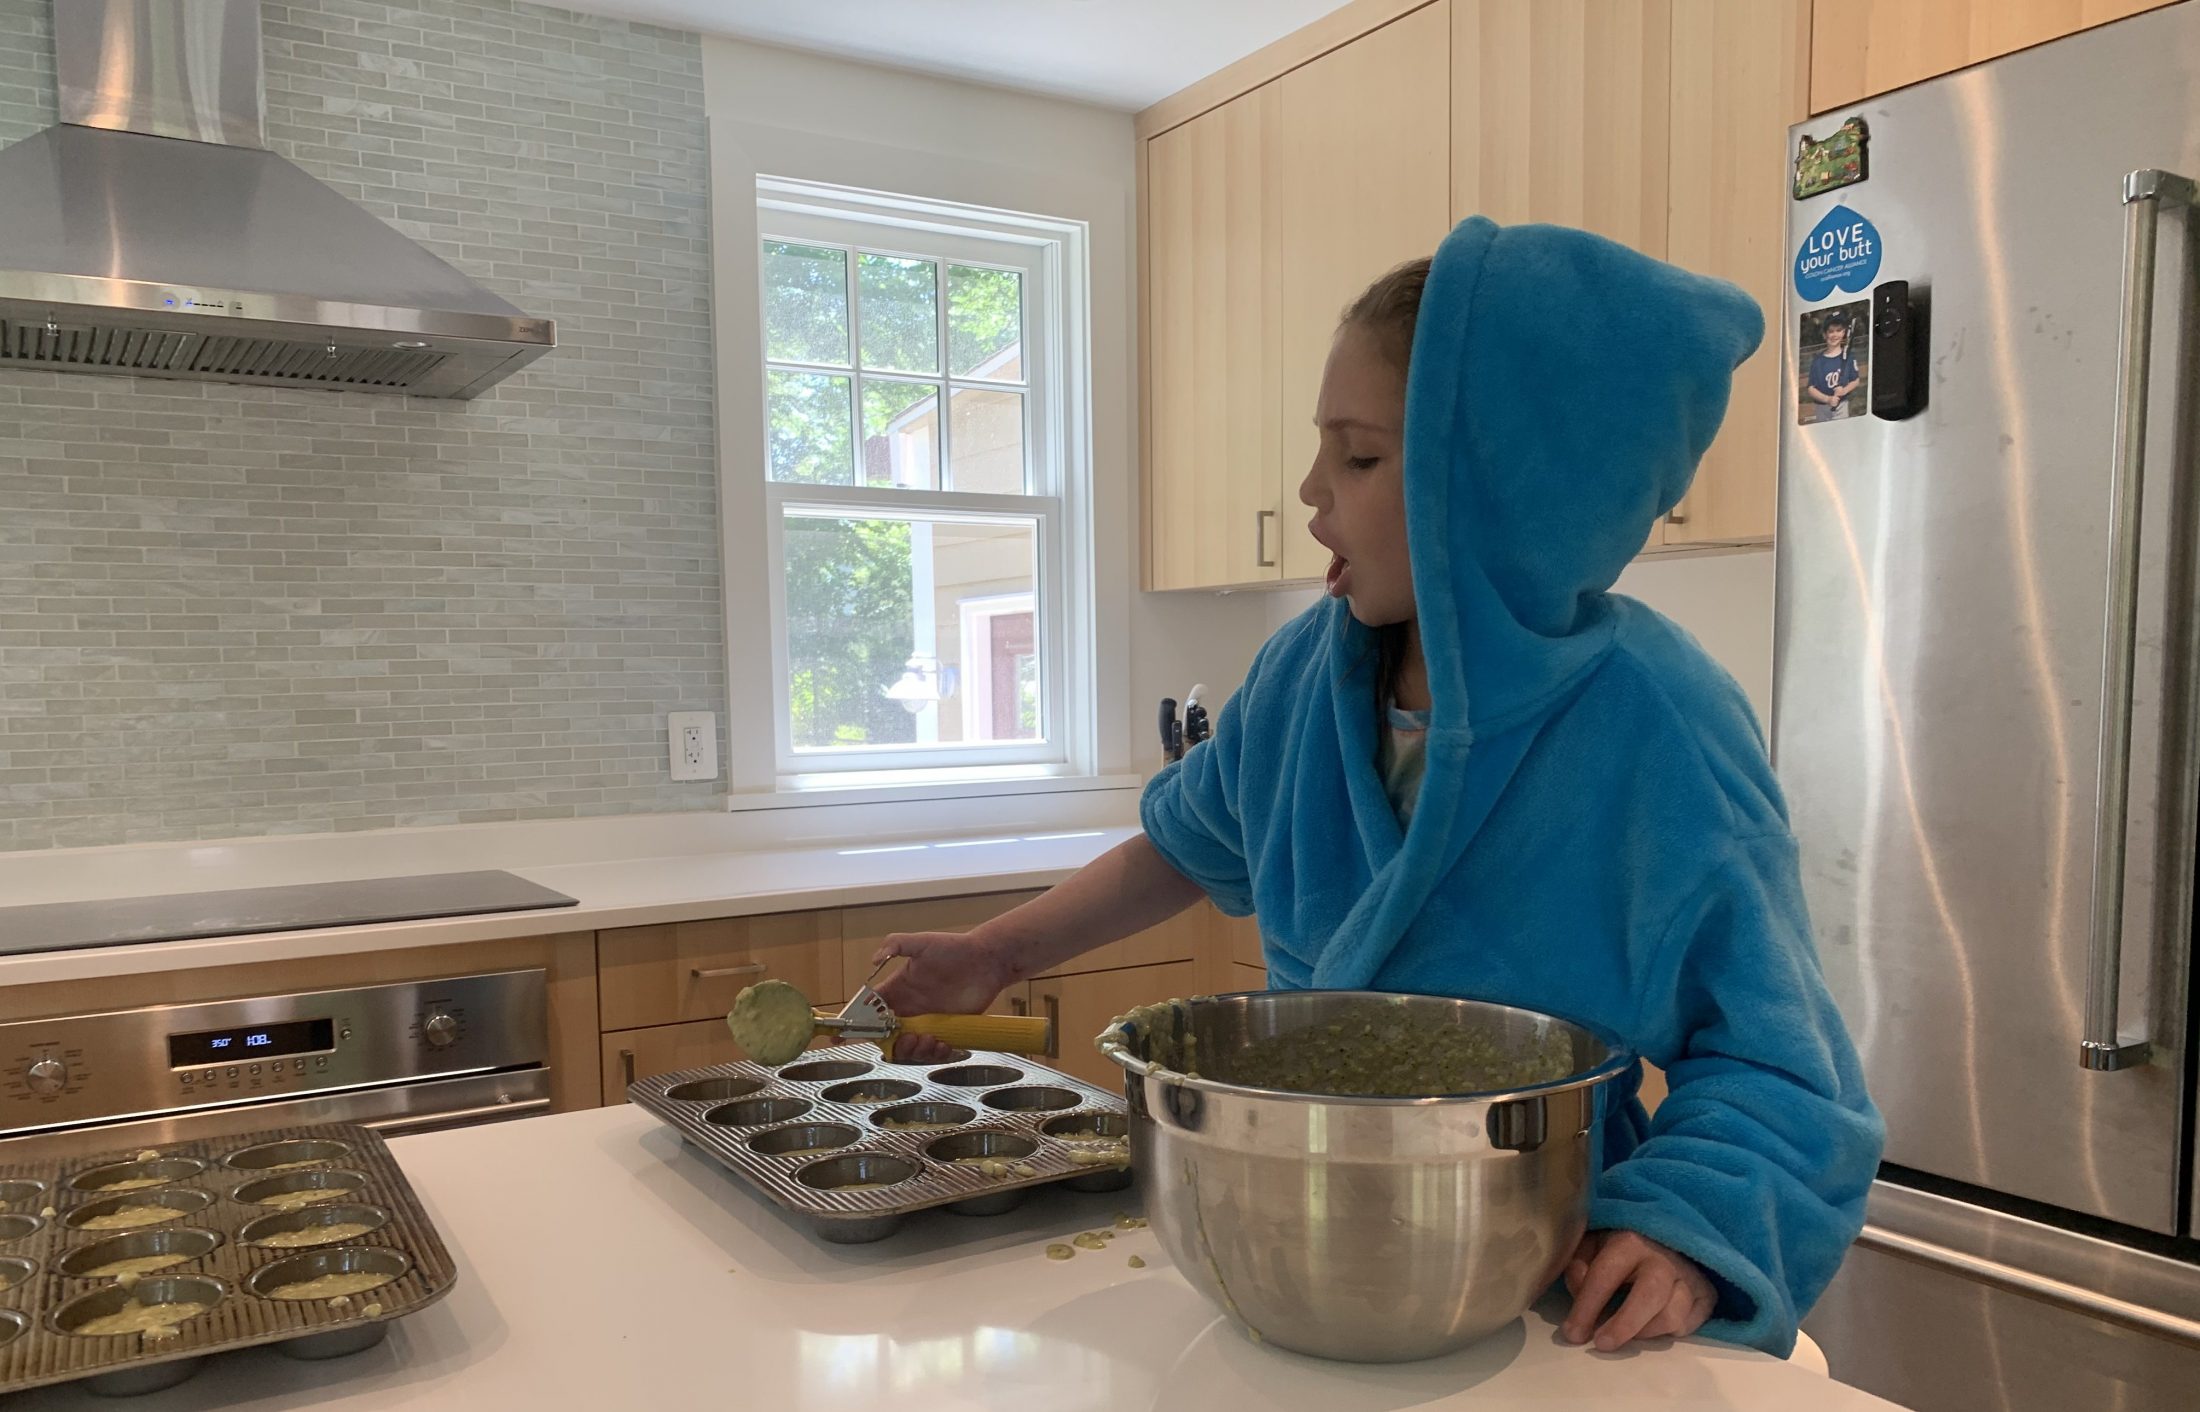 Claire Brimley daughter of DC widow blog writer Marjorie Brimley makes muffins in their kitchen in a blue robe in Washington